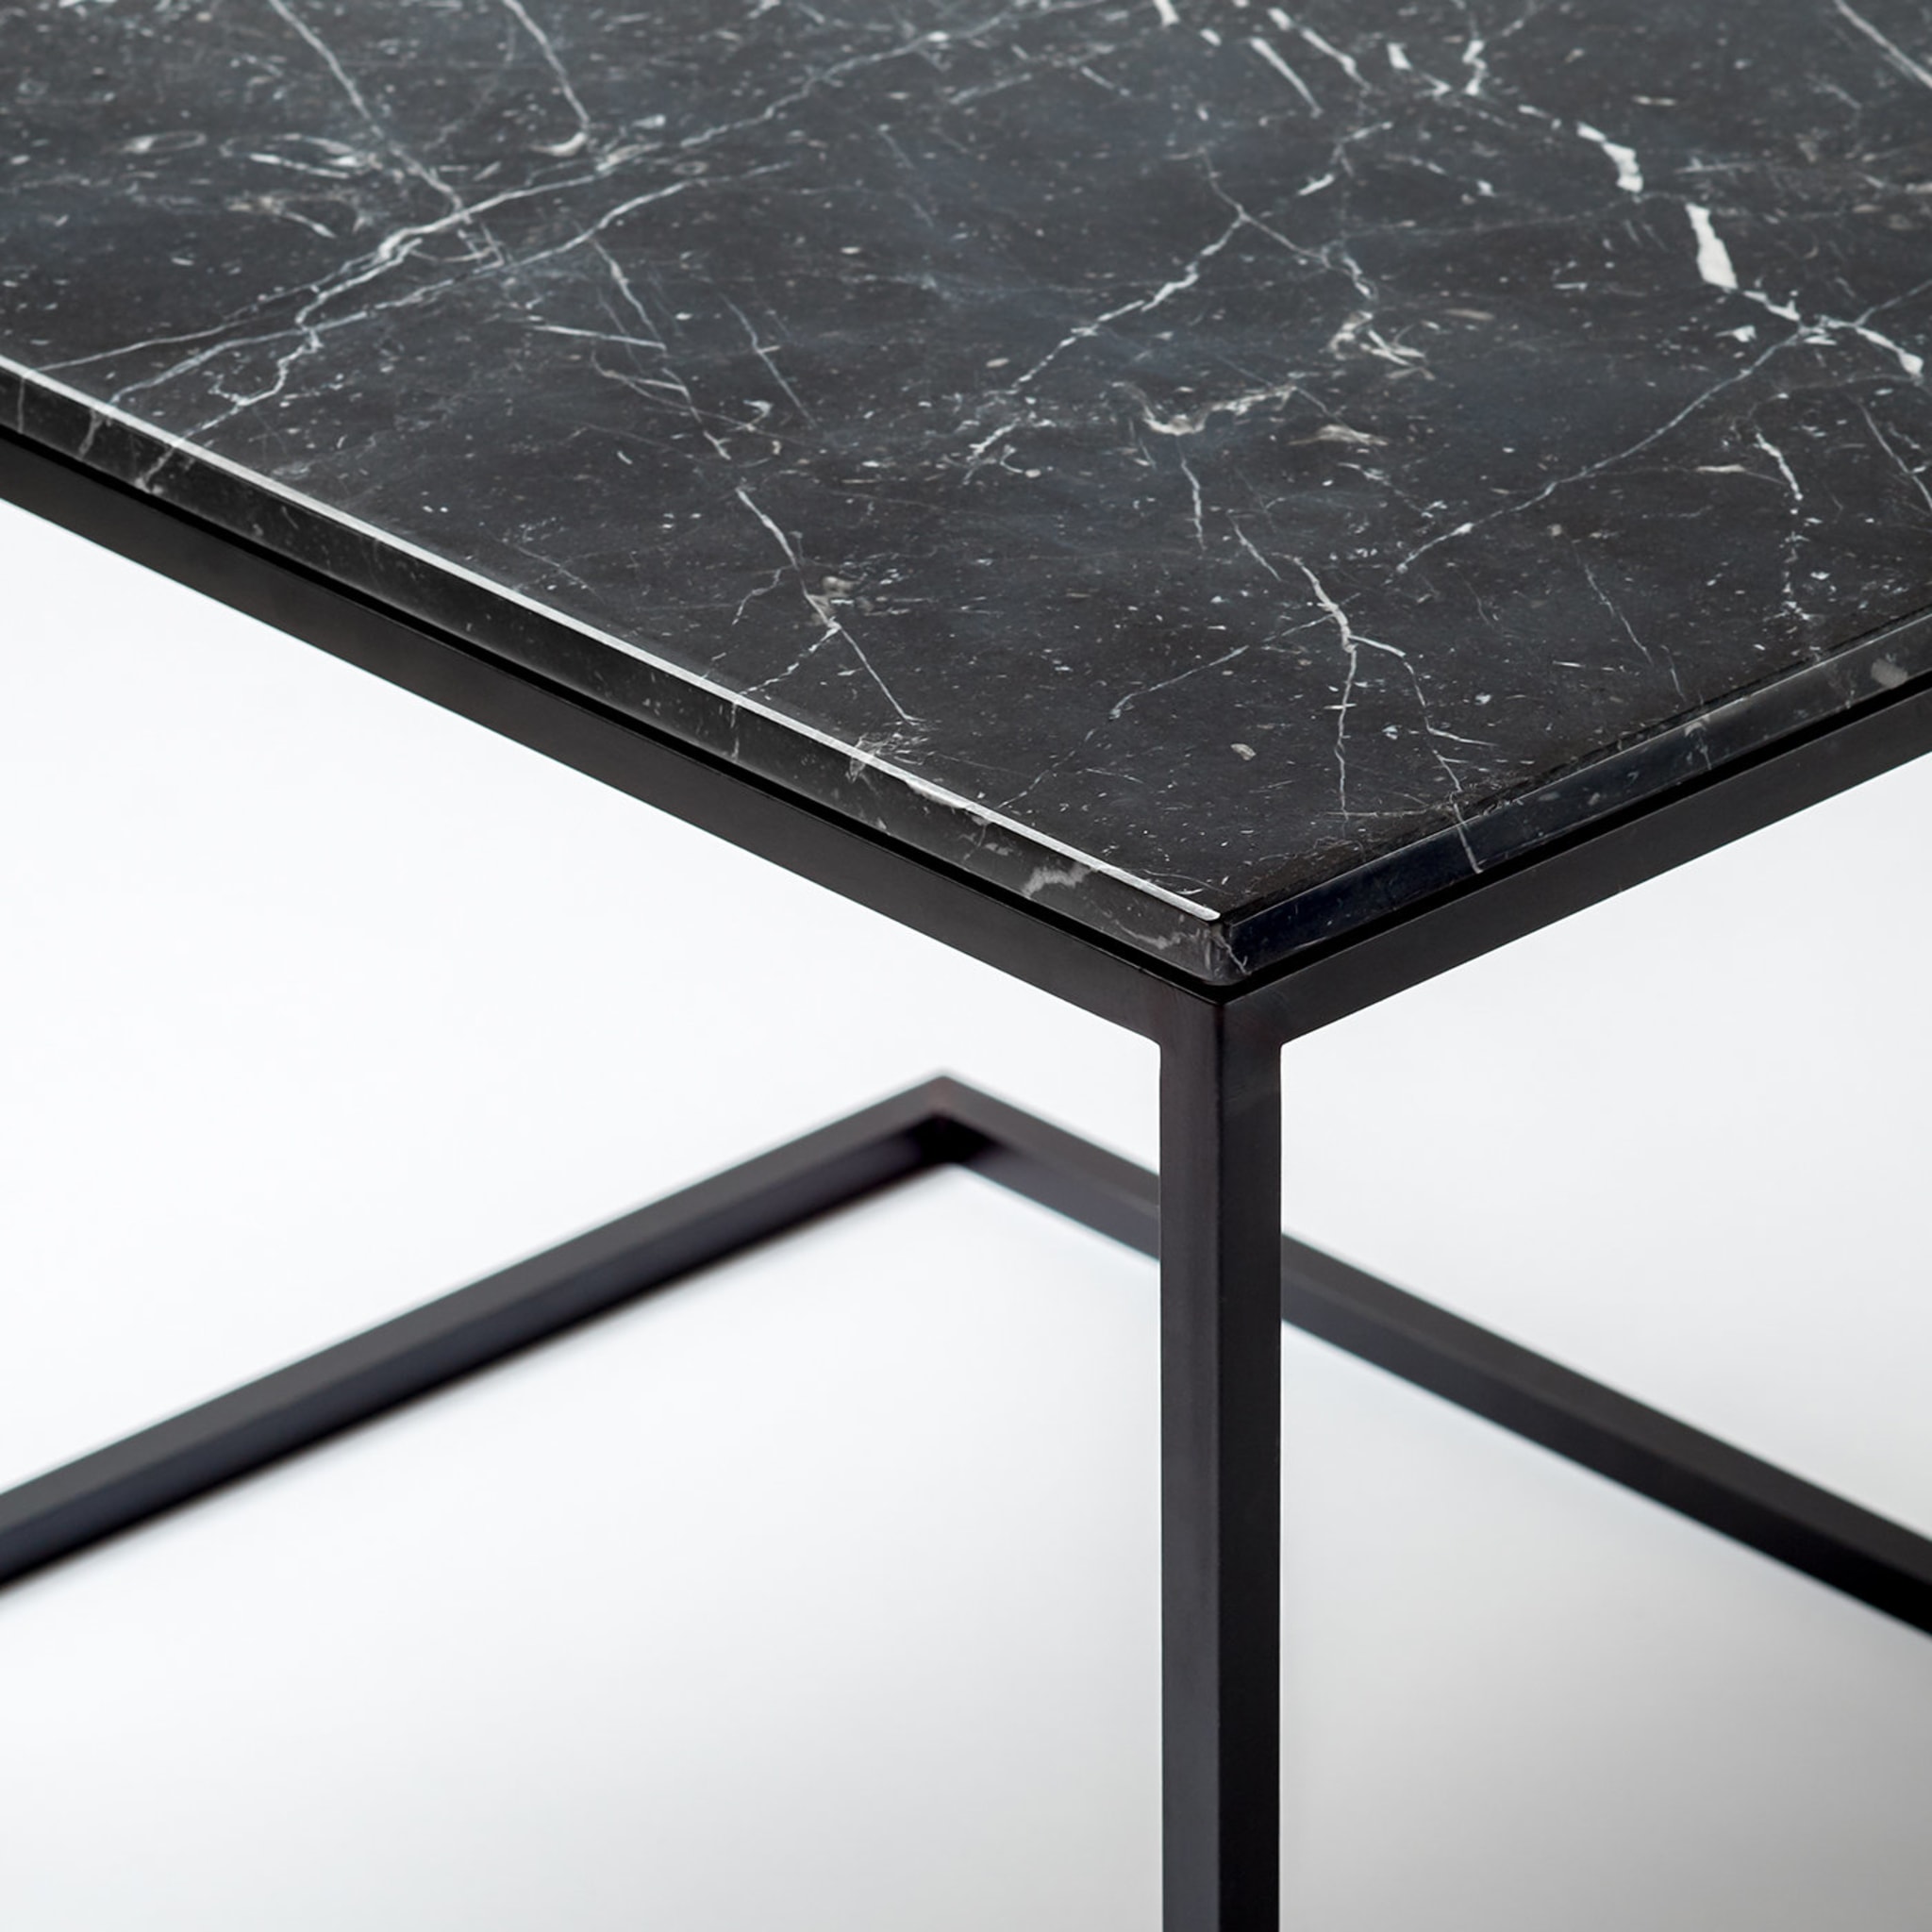 Esopo Black Side Table by Antonio Saporito - Alternative view 1